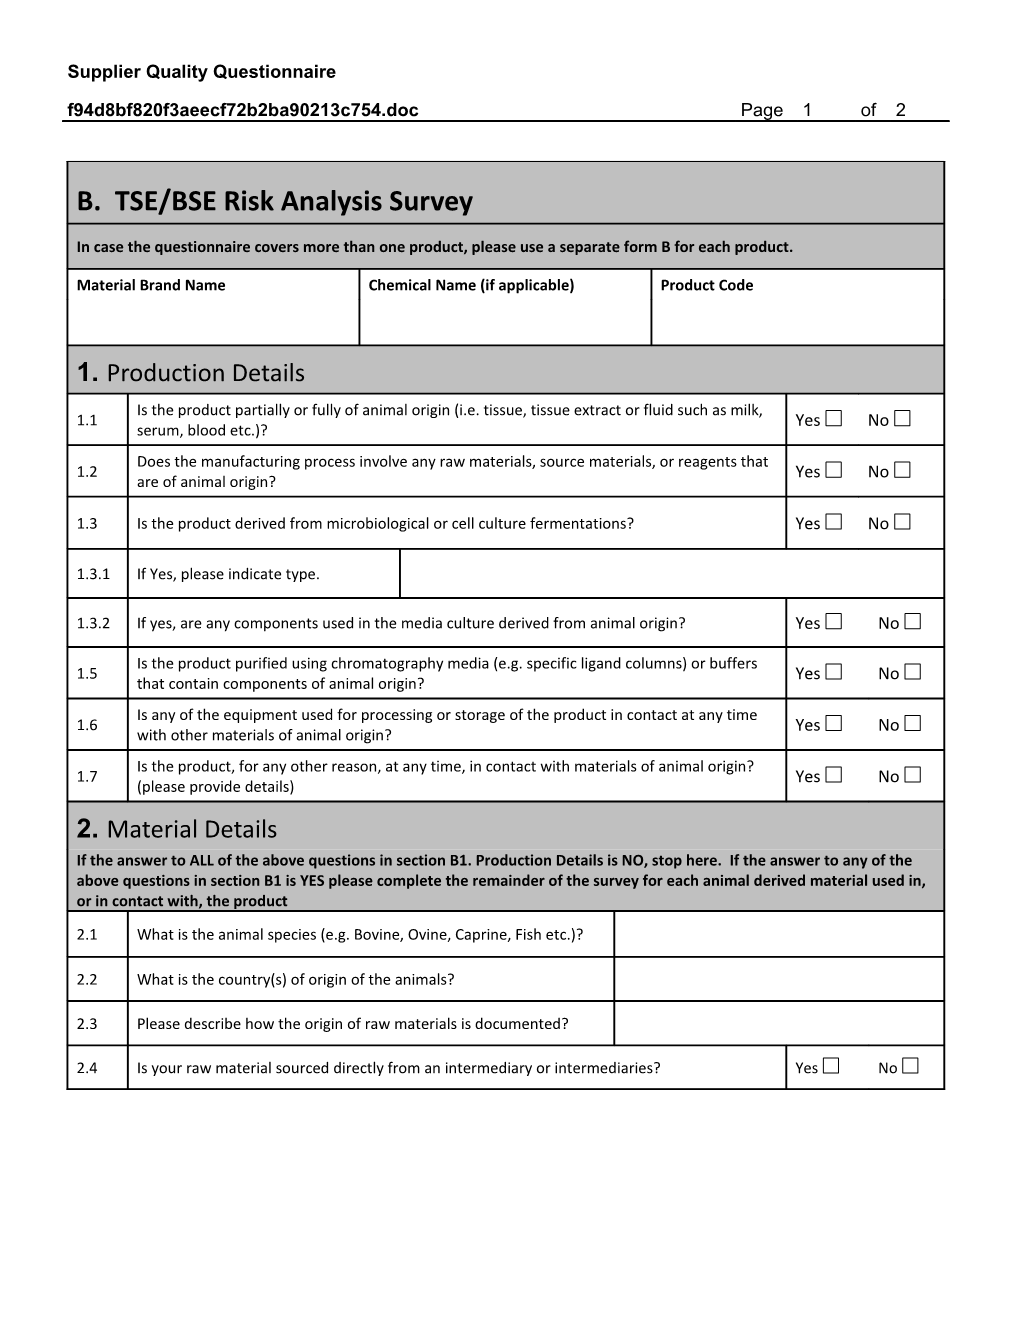 Supplier Quality Evaluation Questionnaire